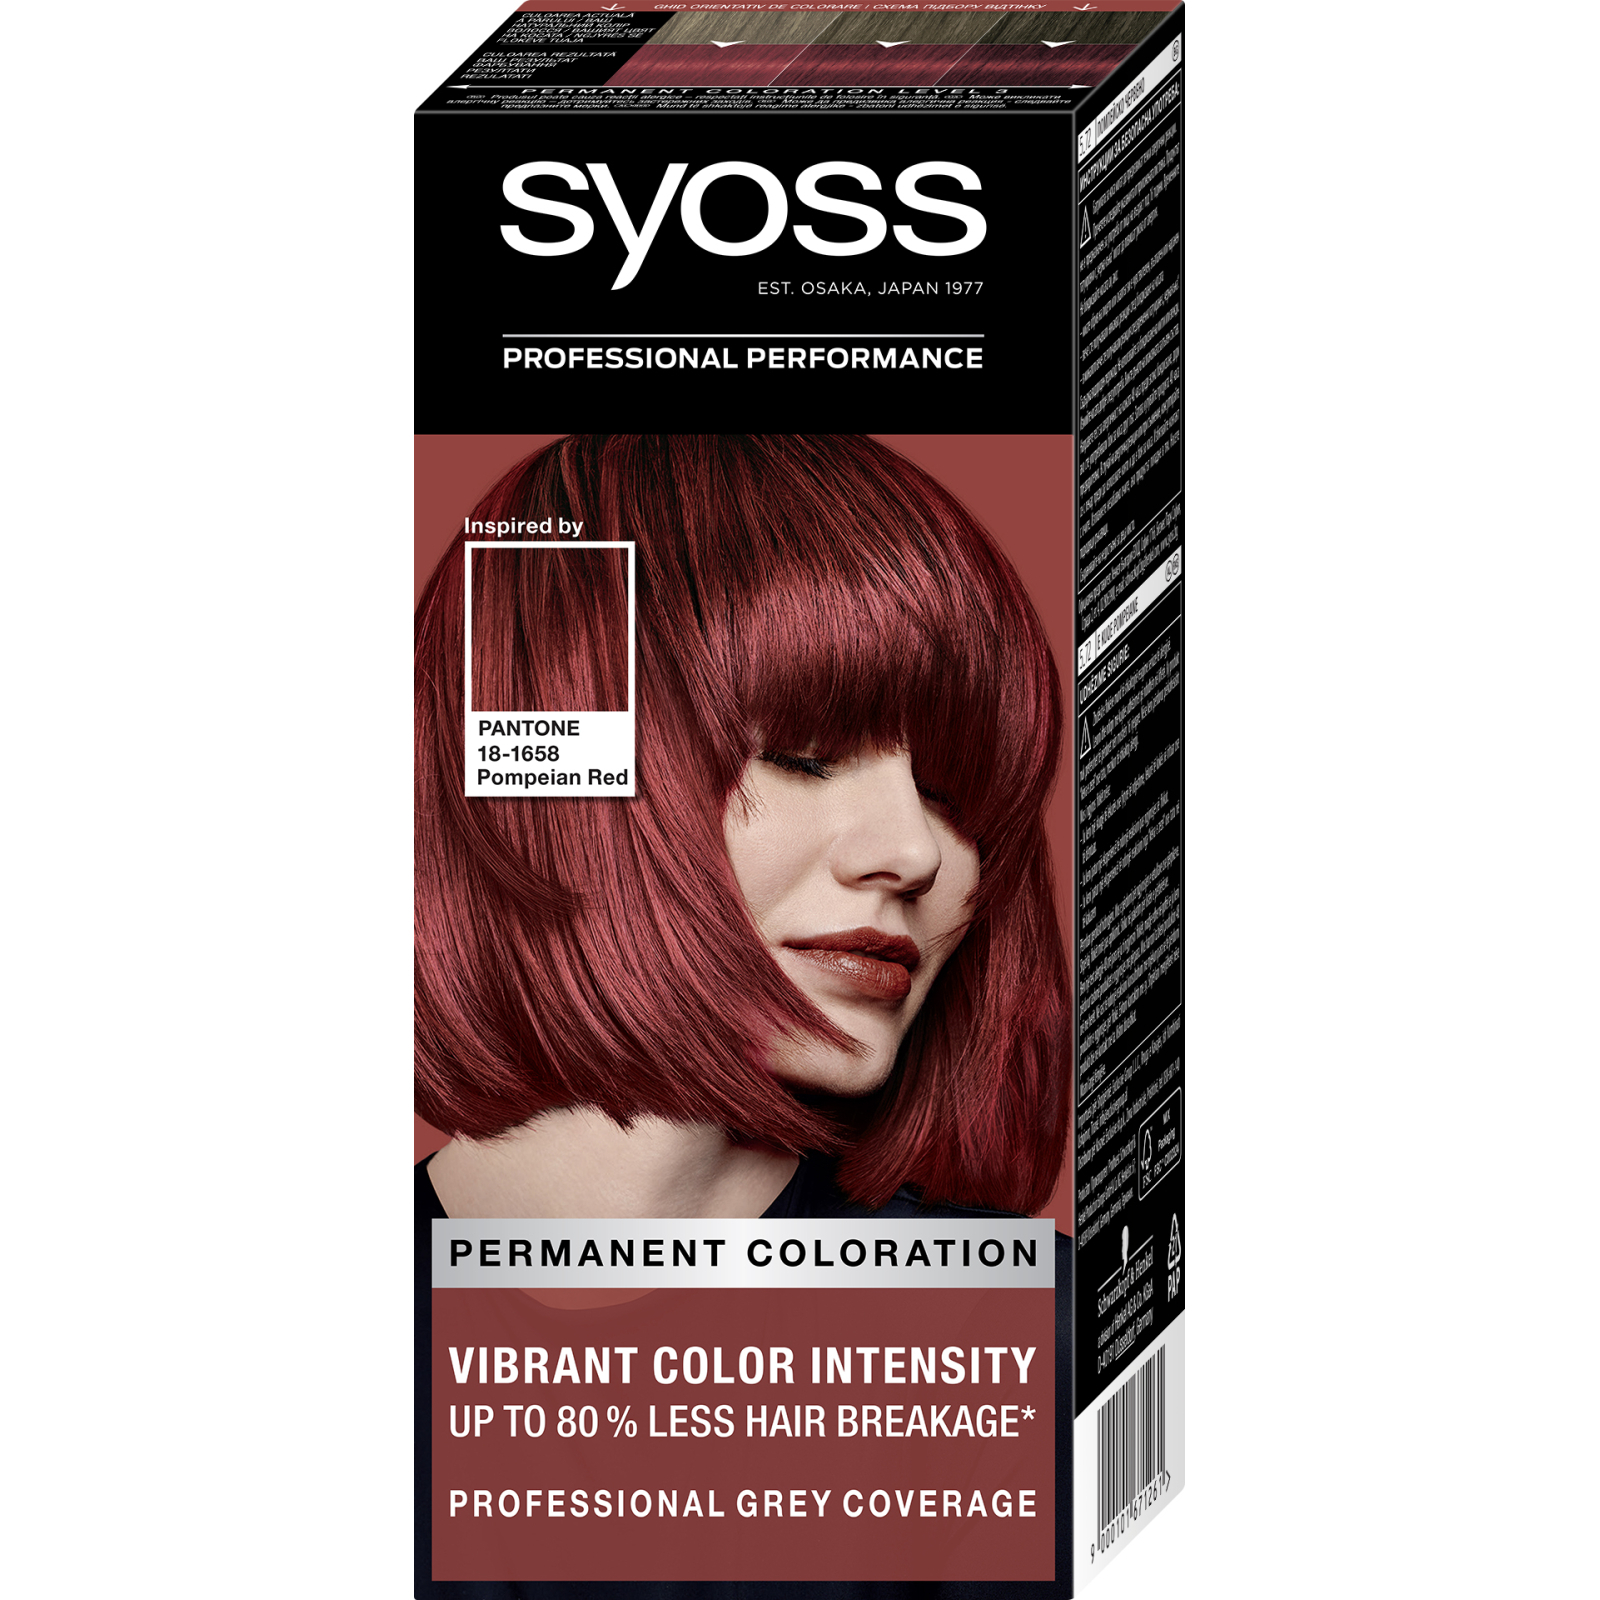 Краска для волос Syoss 12-59 Холодный Платиновый блонд 115 мл (9000101210521)